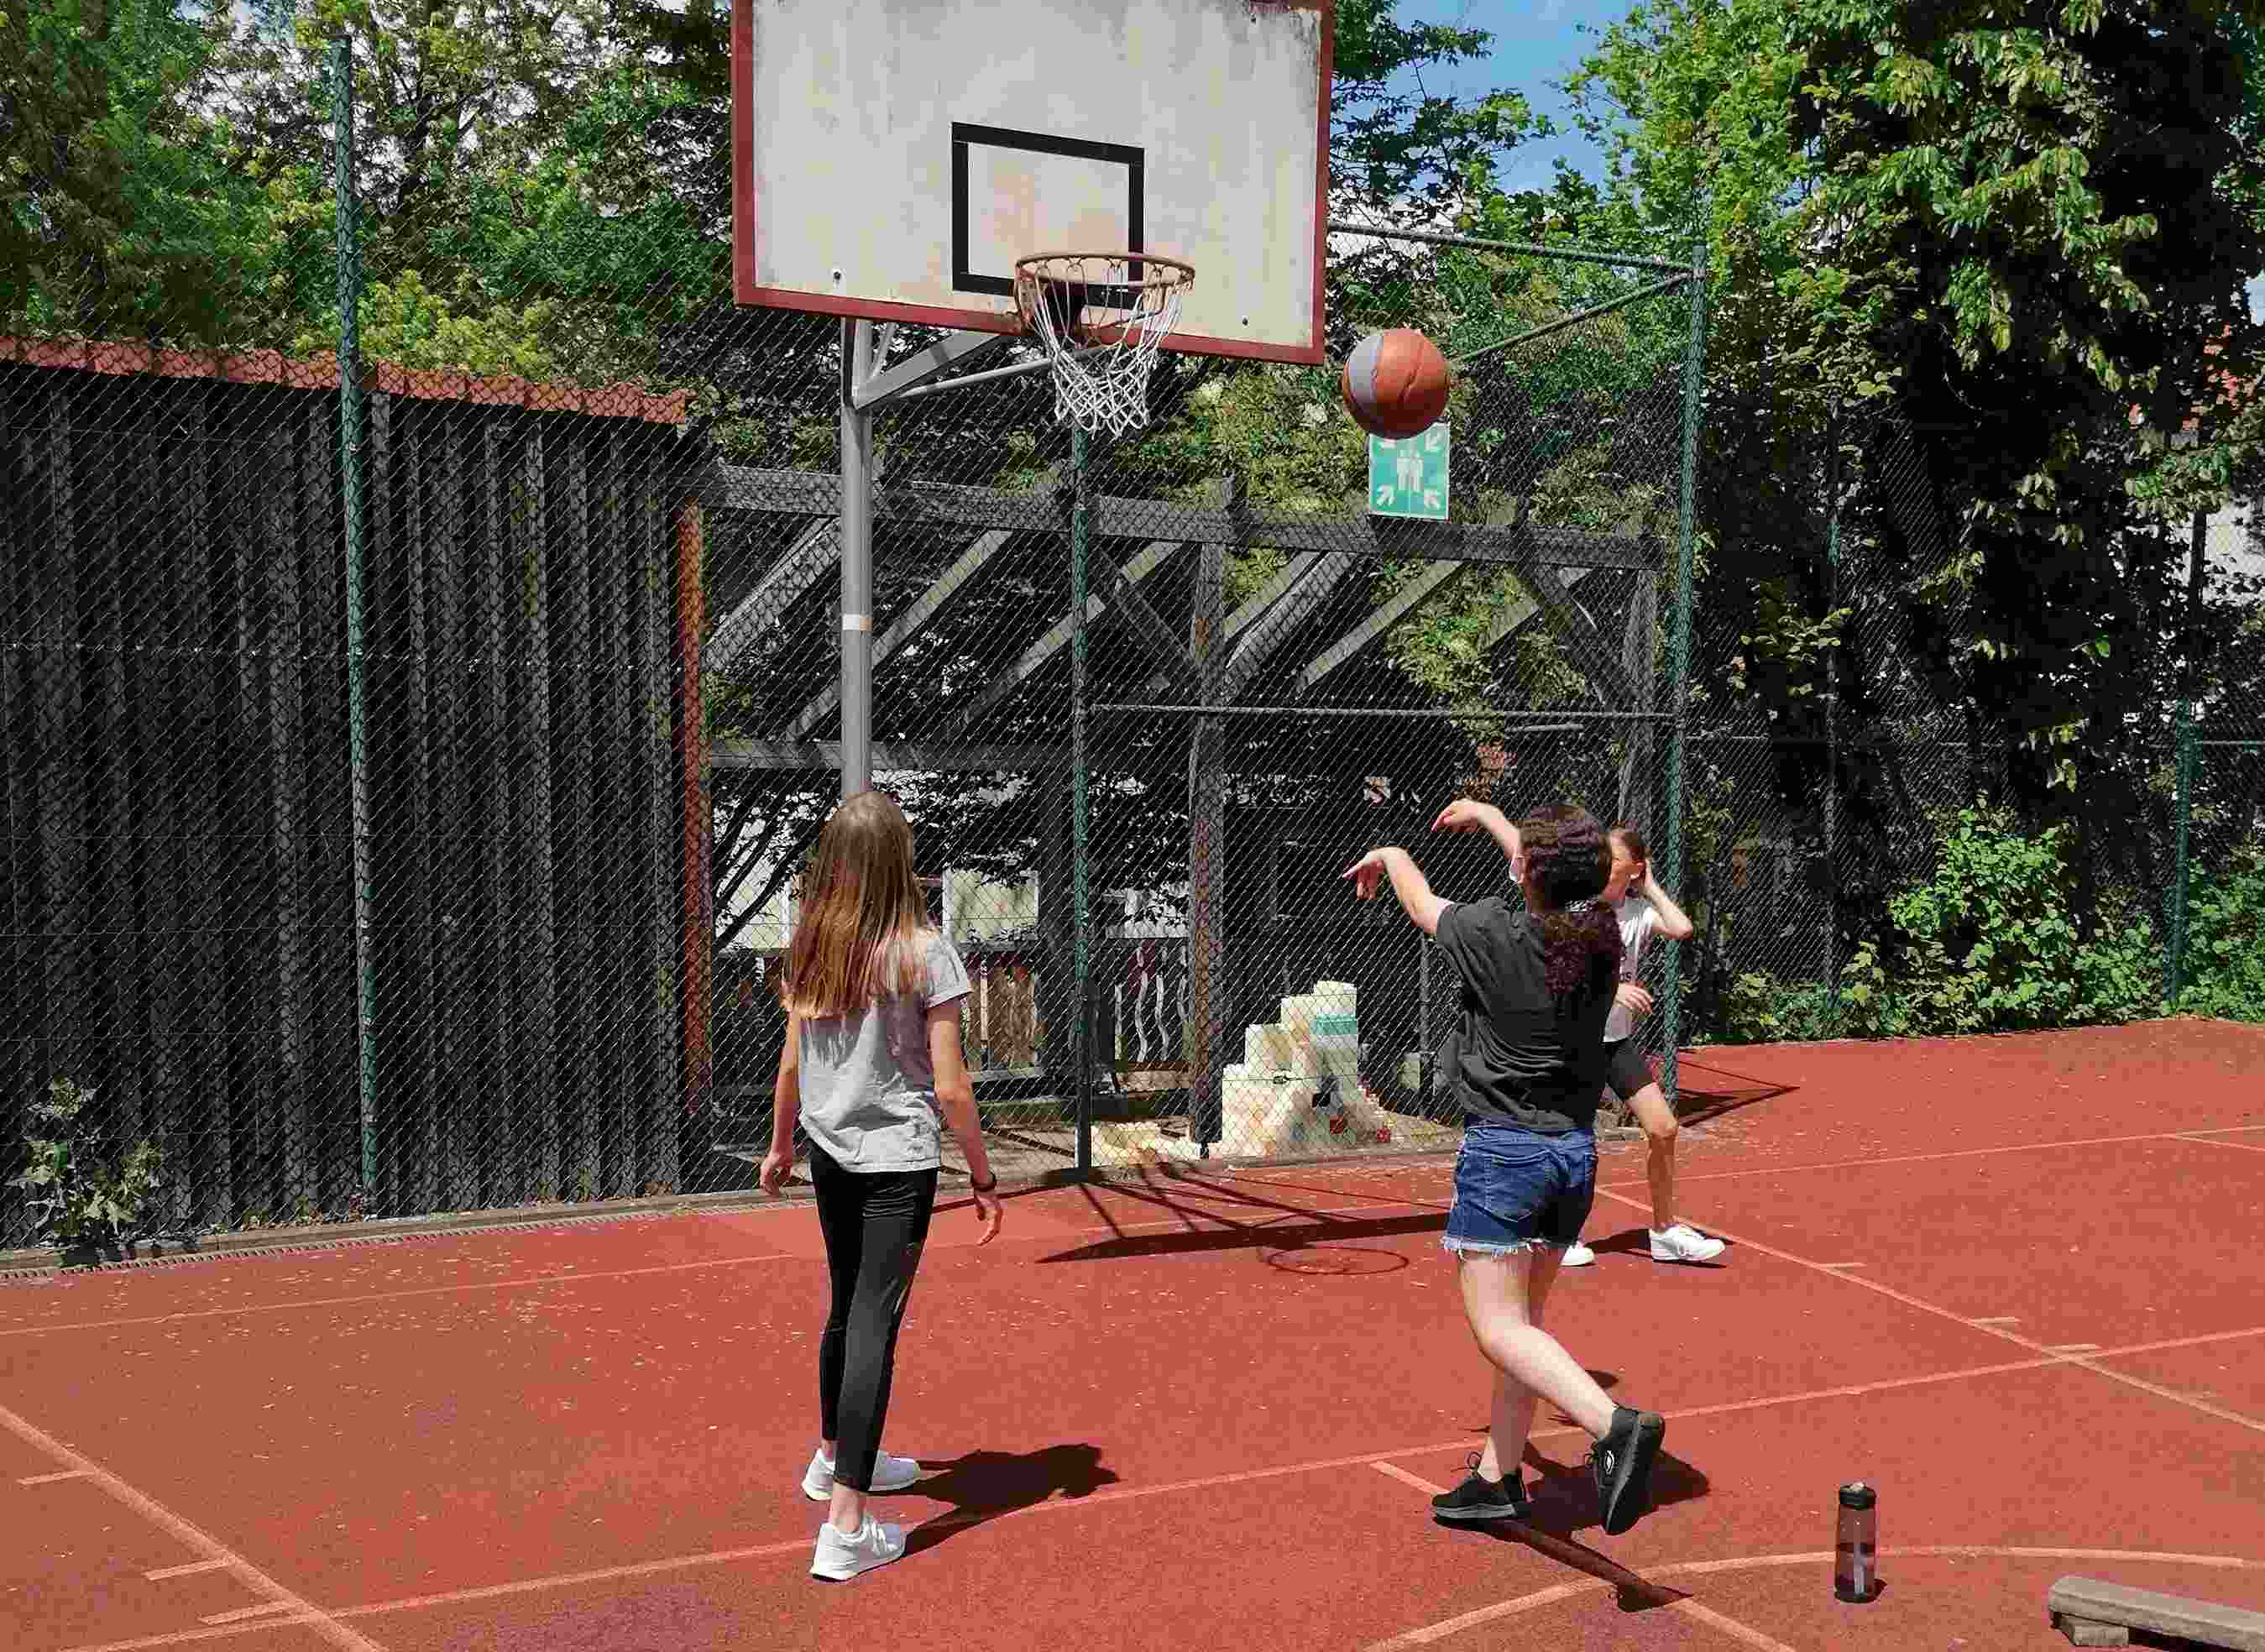 BasketballB